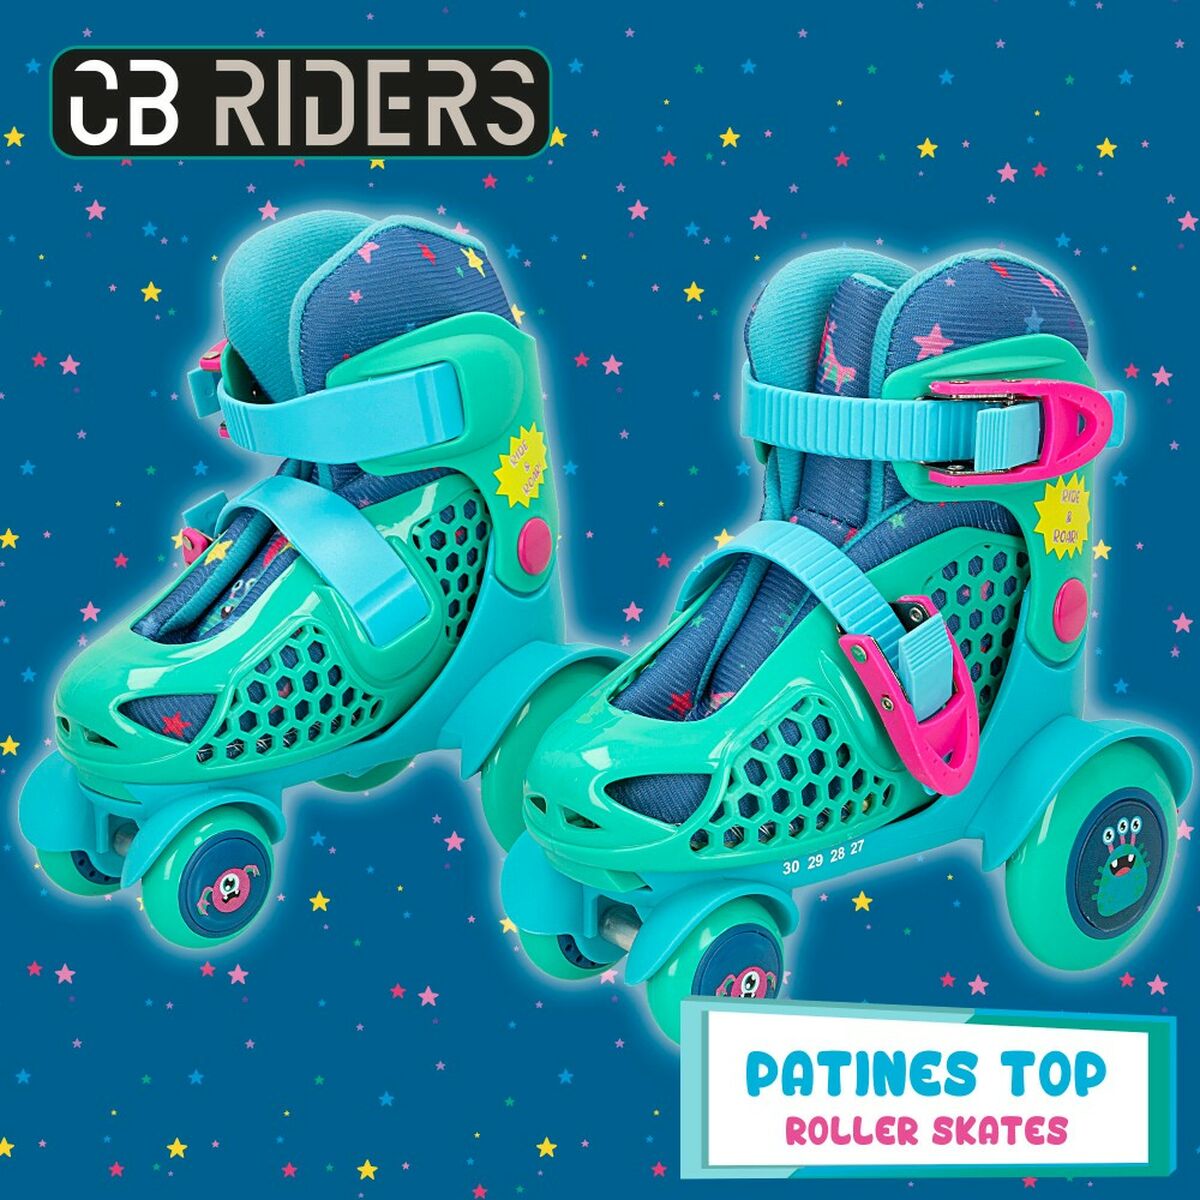 Roller Colorbaby Monster 27-30 (4 Stück)